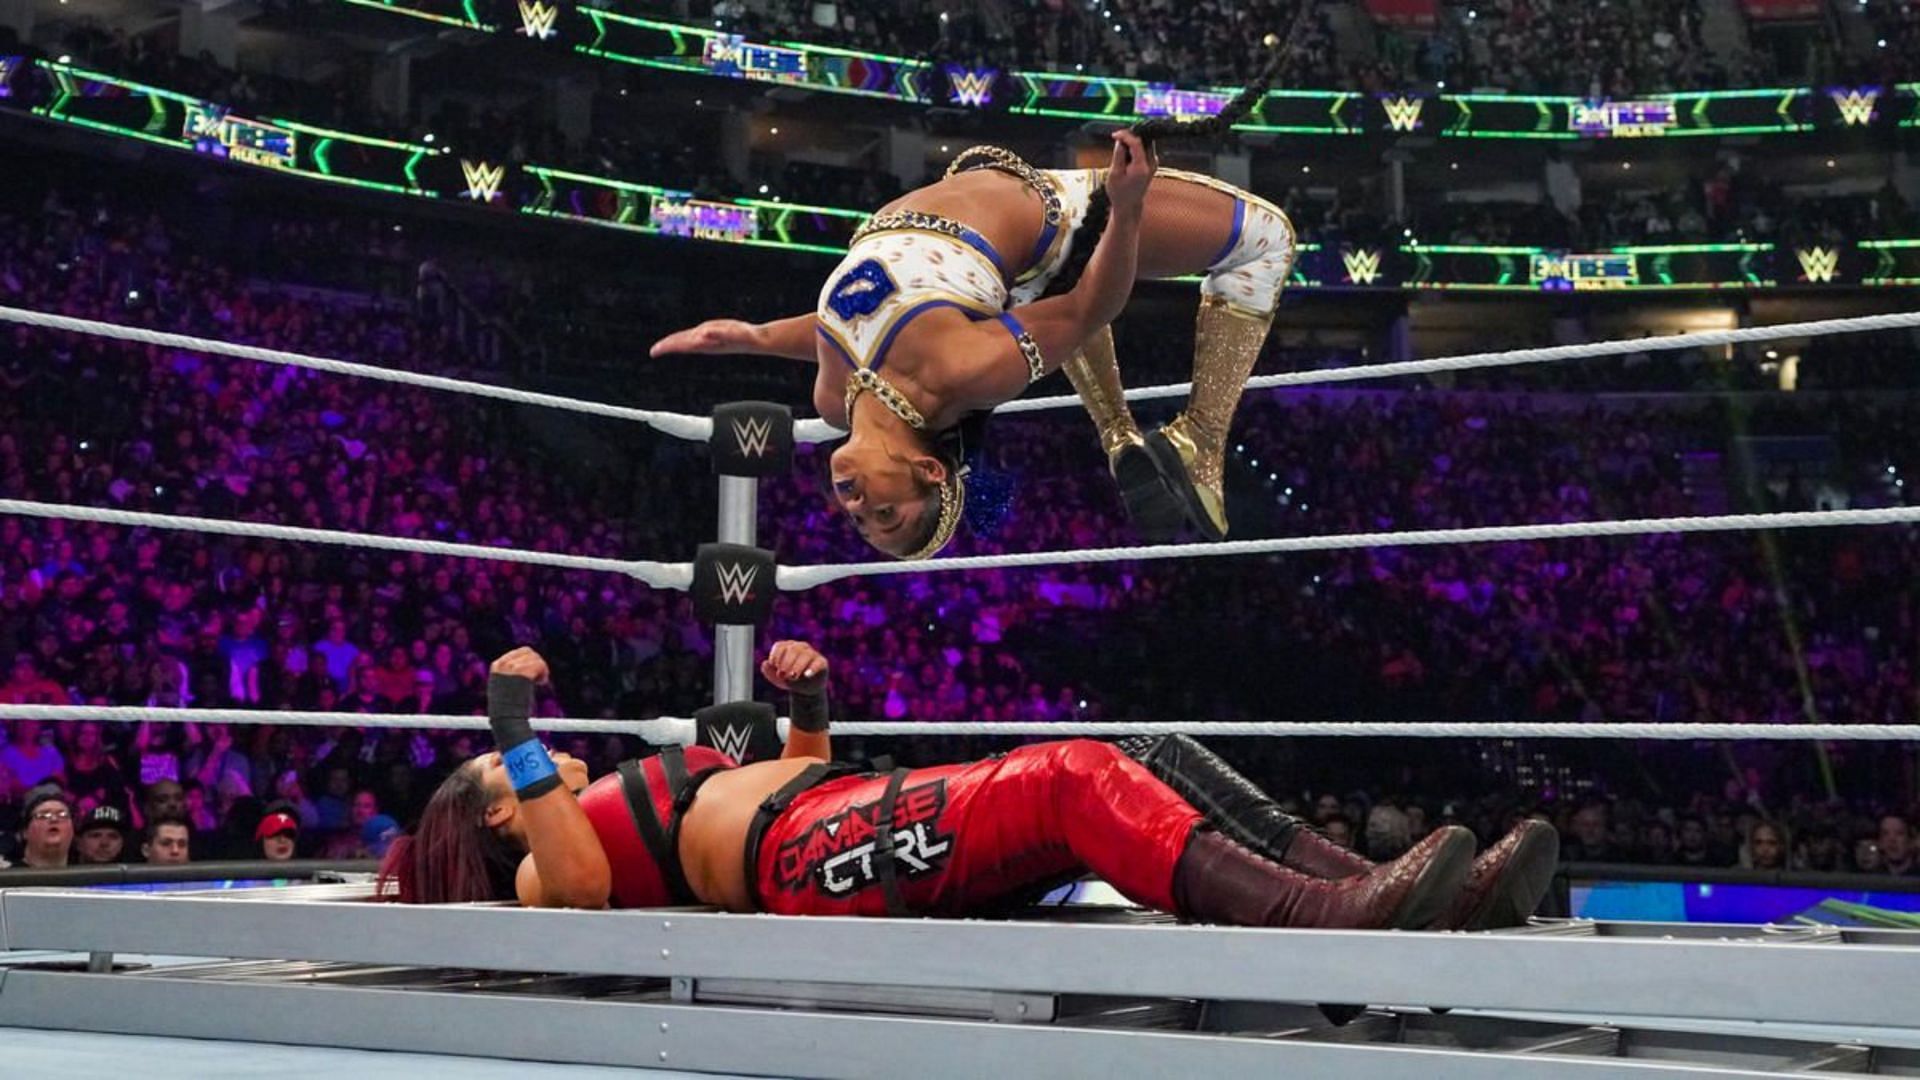 Bianca Belair delivering a Moonsault to Bayley on a ladder (Source: WWE.com)